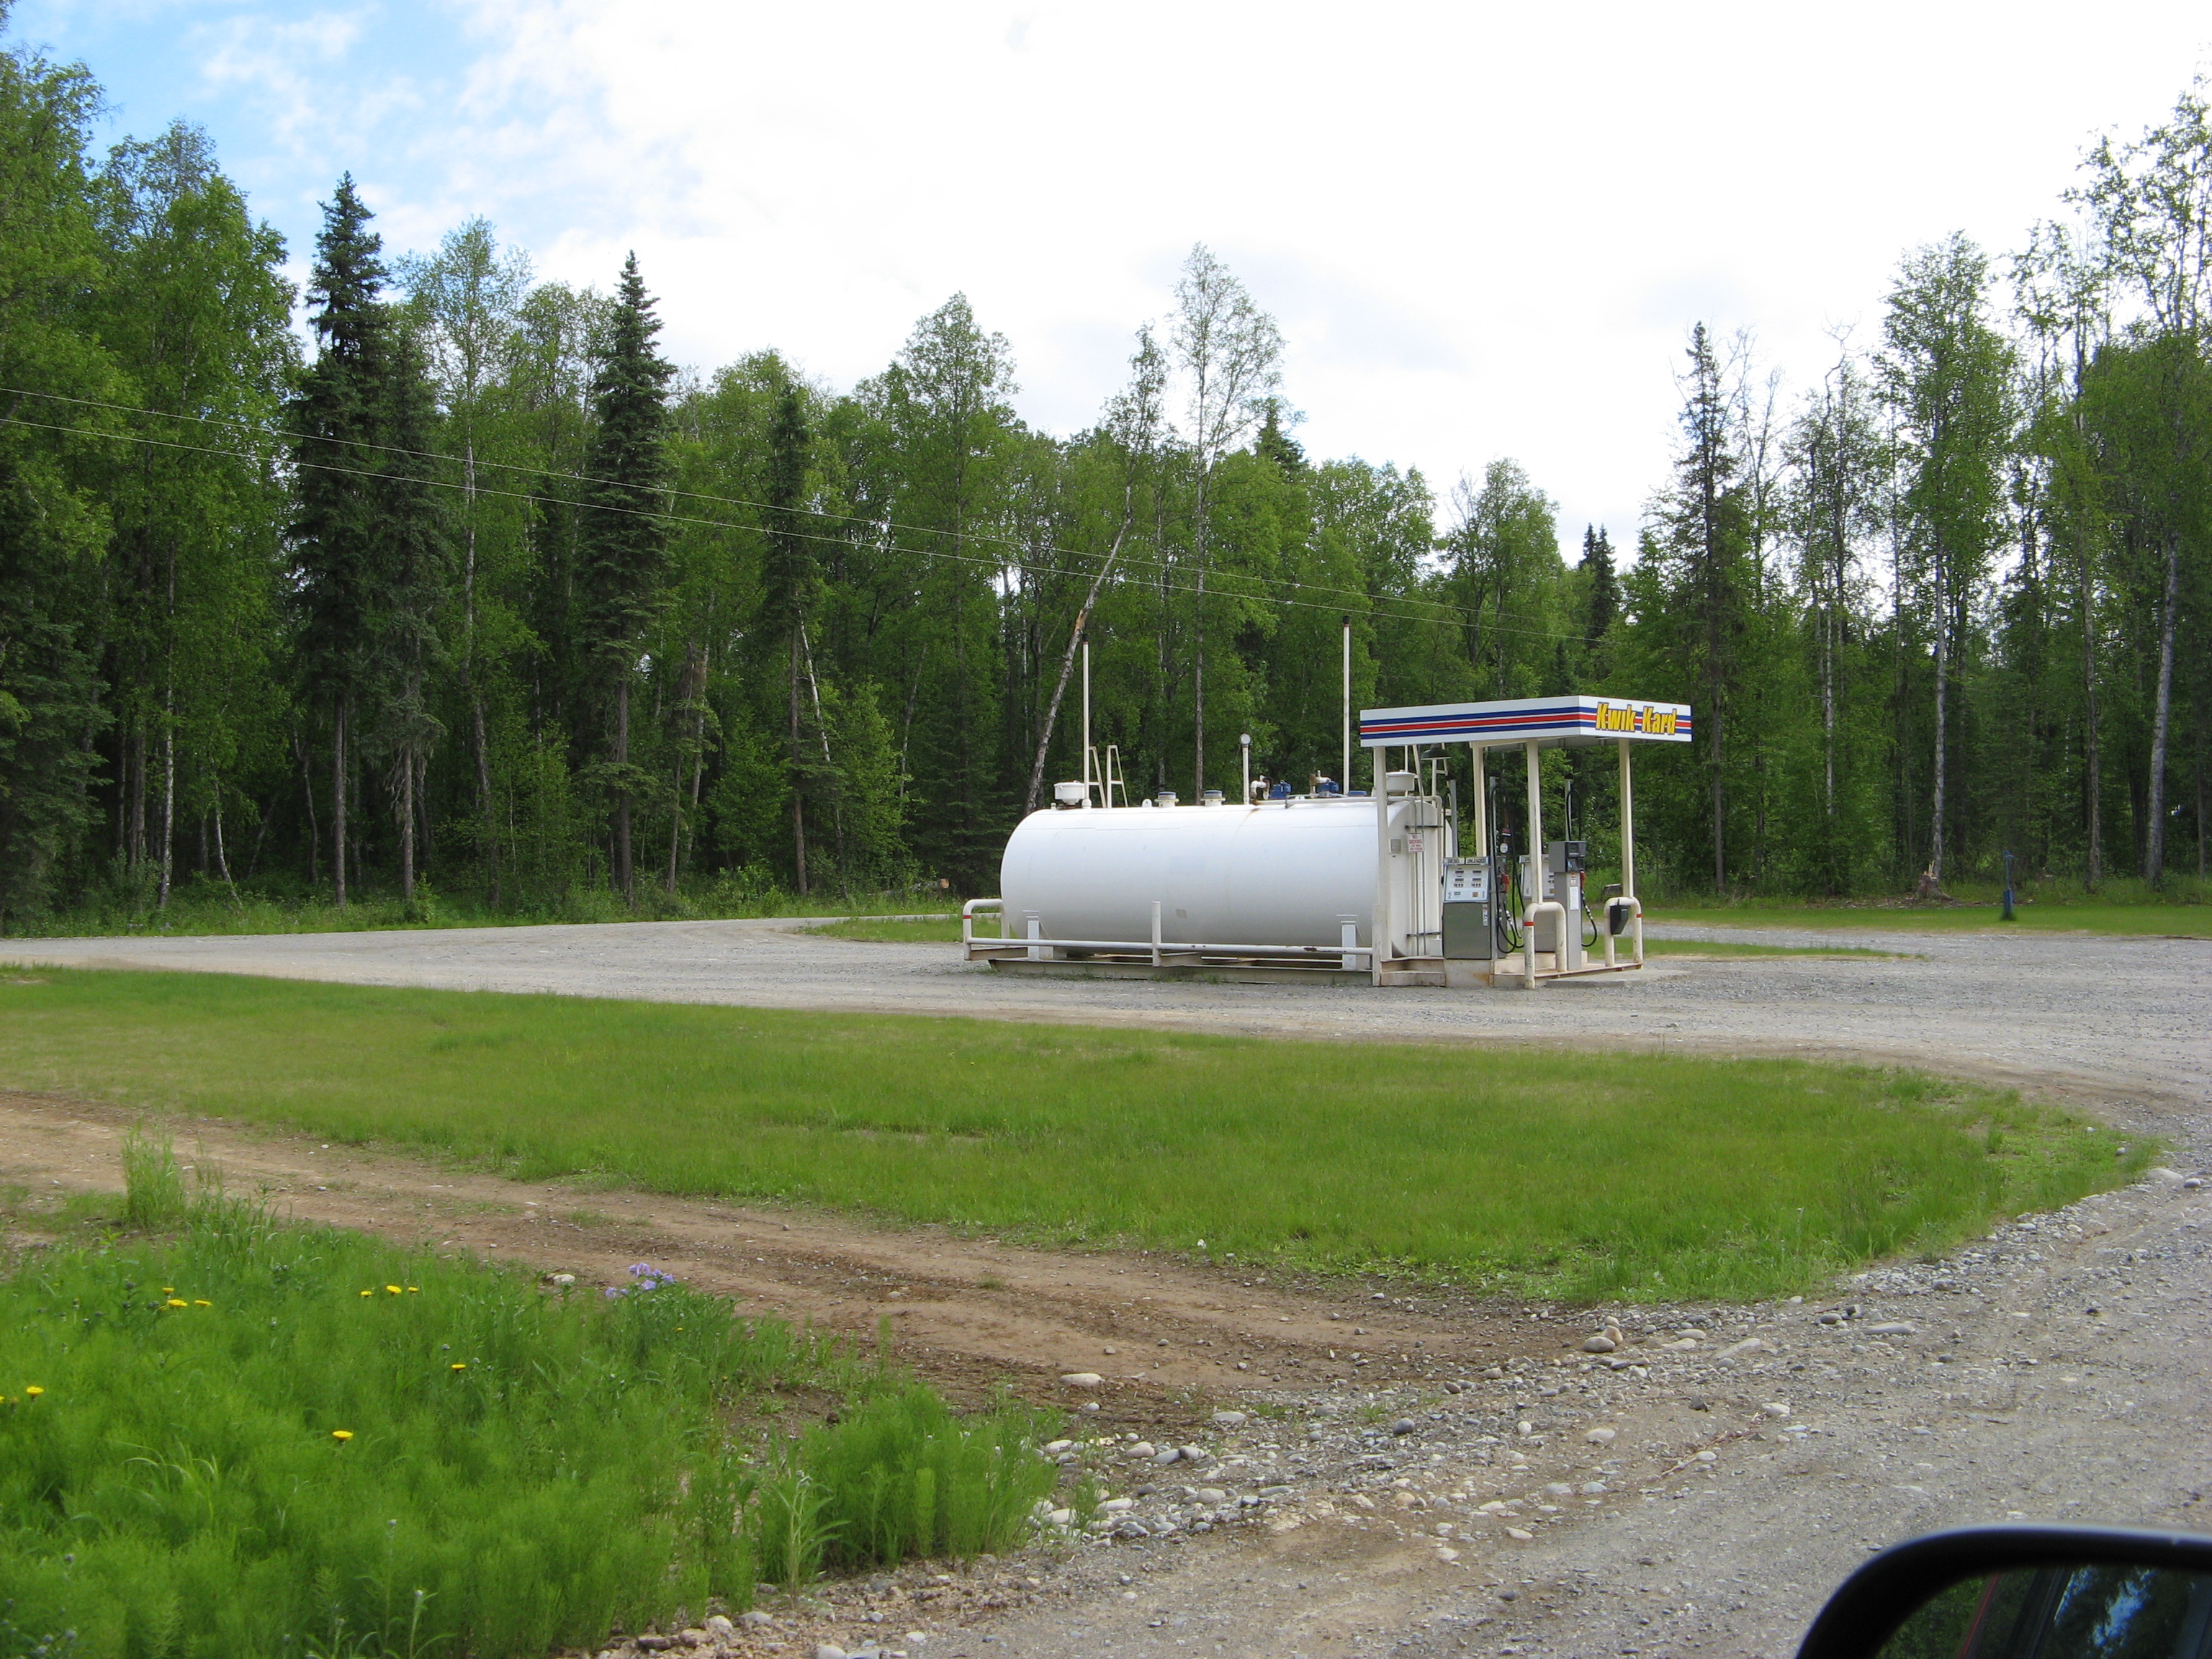 The gas station in Talkeetna, Alaska.